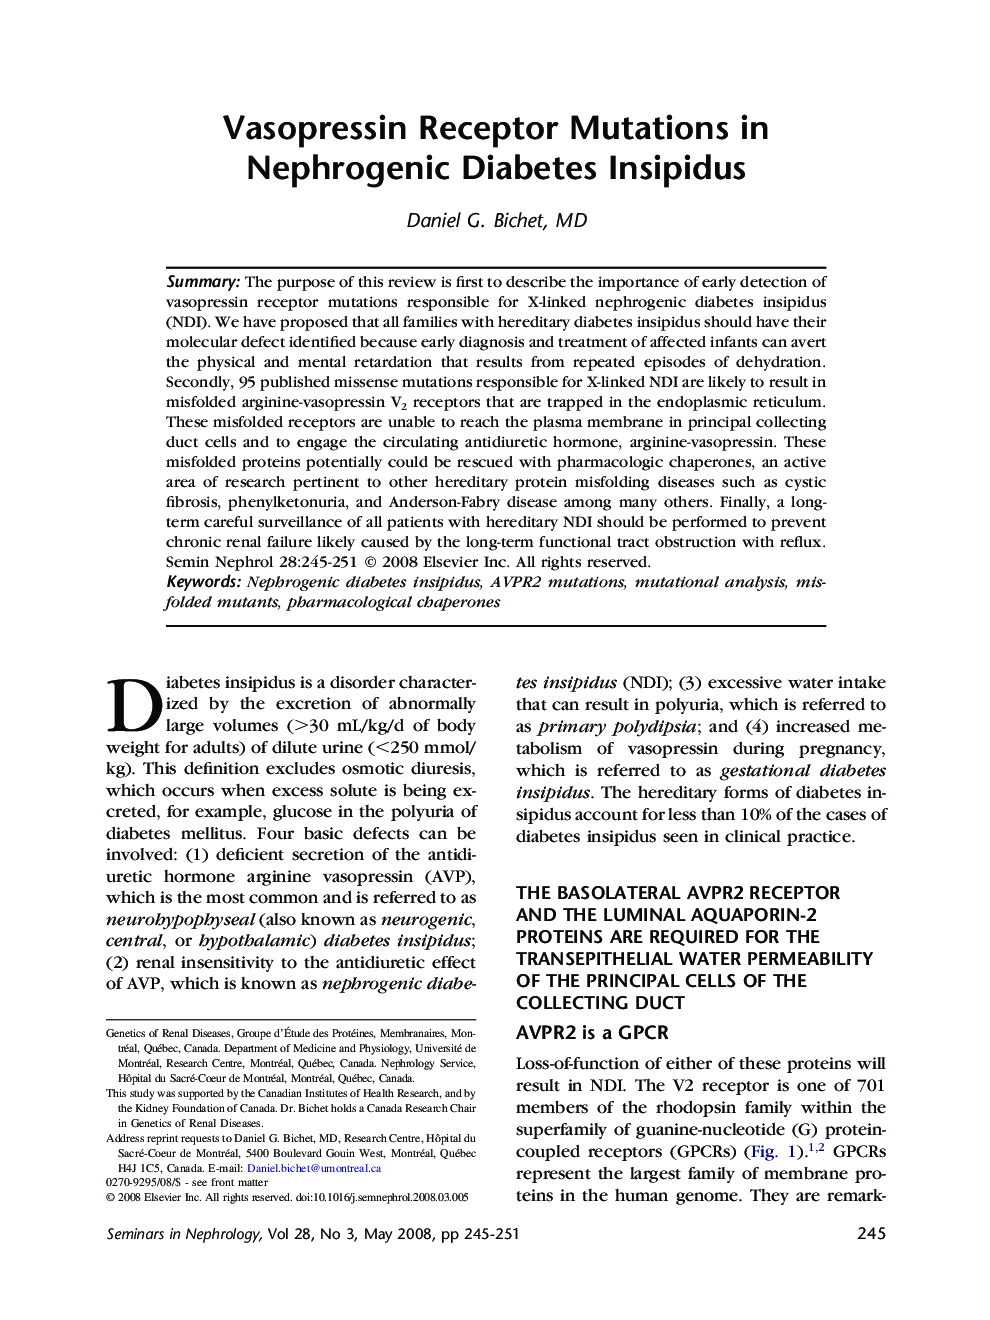 Vasopressin Receptor Mutations in Nephrogenic Diabetes Insipidus